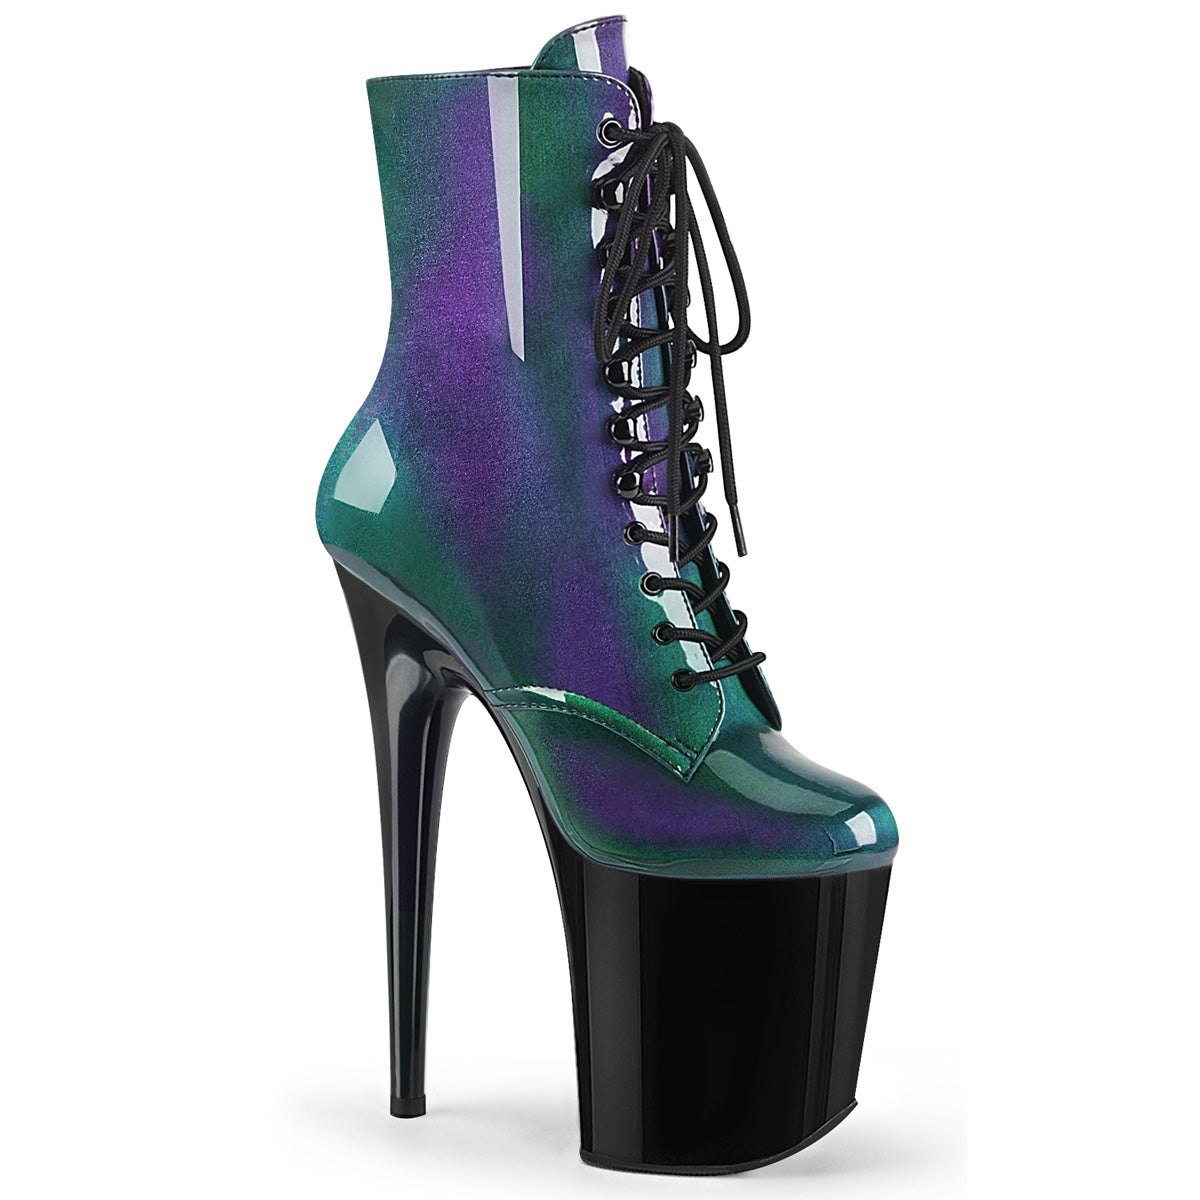 FLAMINGO-1020SHG Strippers Heels Pleaser Platforms (Exotic Dancing) Purple-Green/Blk